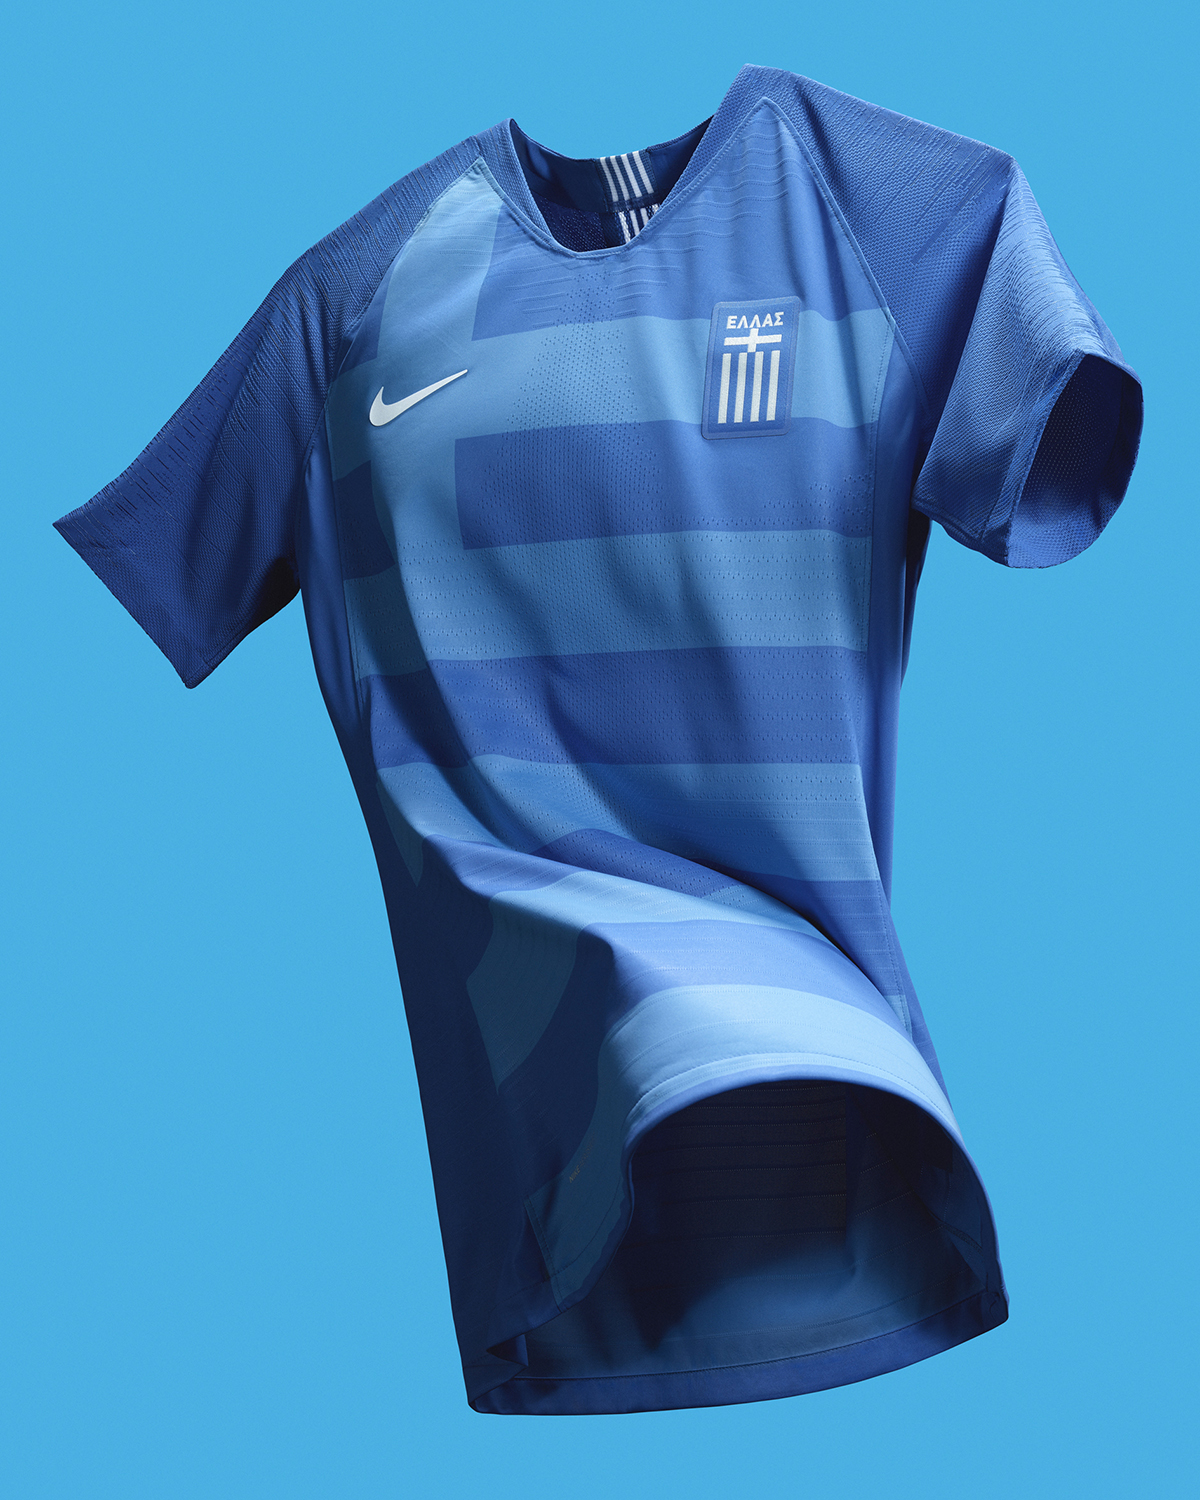 Camiseta Nike de Grecia 2018